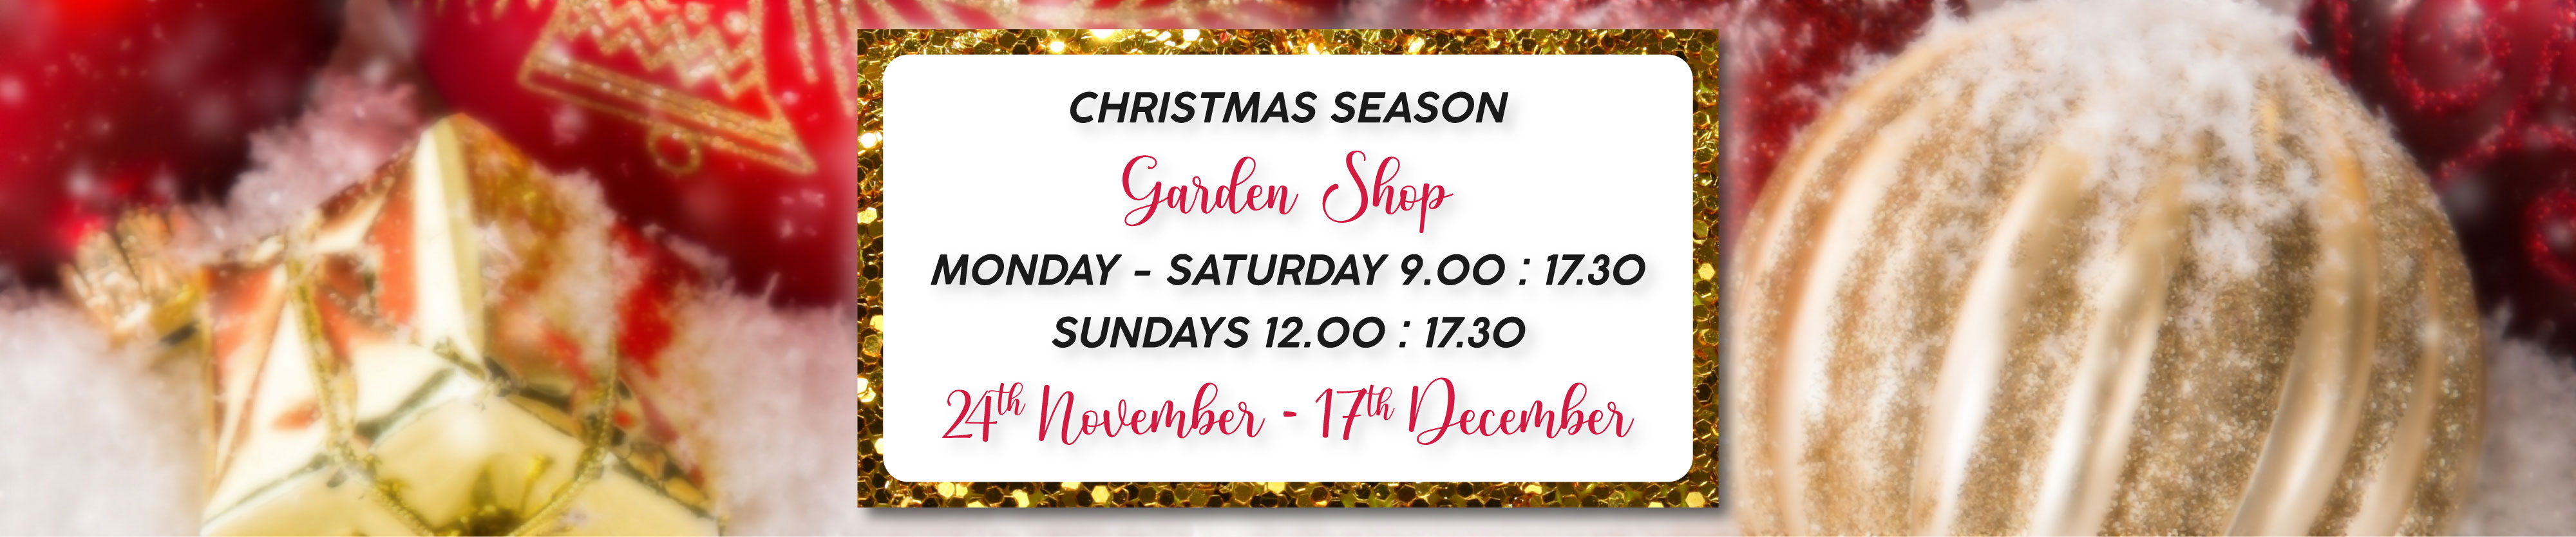 Christmas Season - Gardenworld Opening Hours